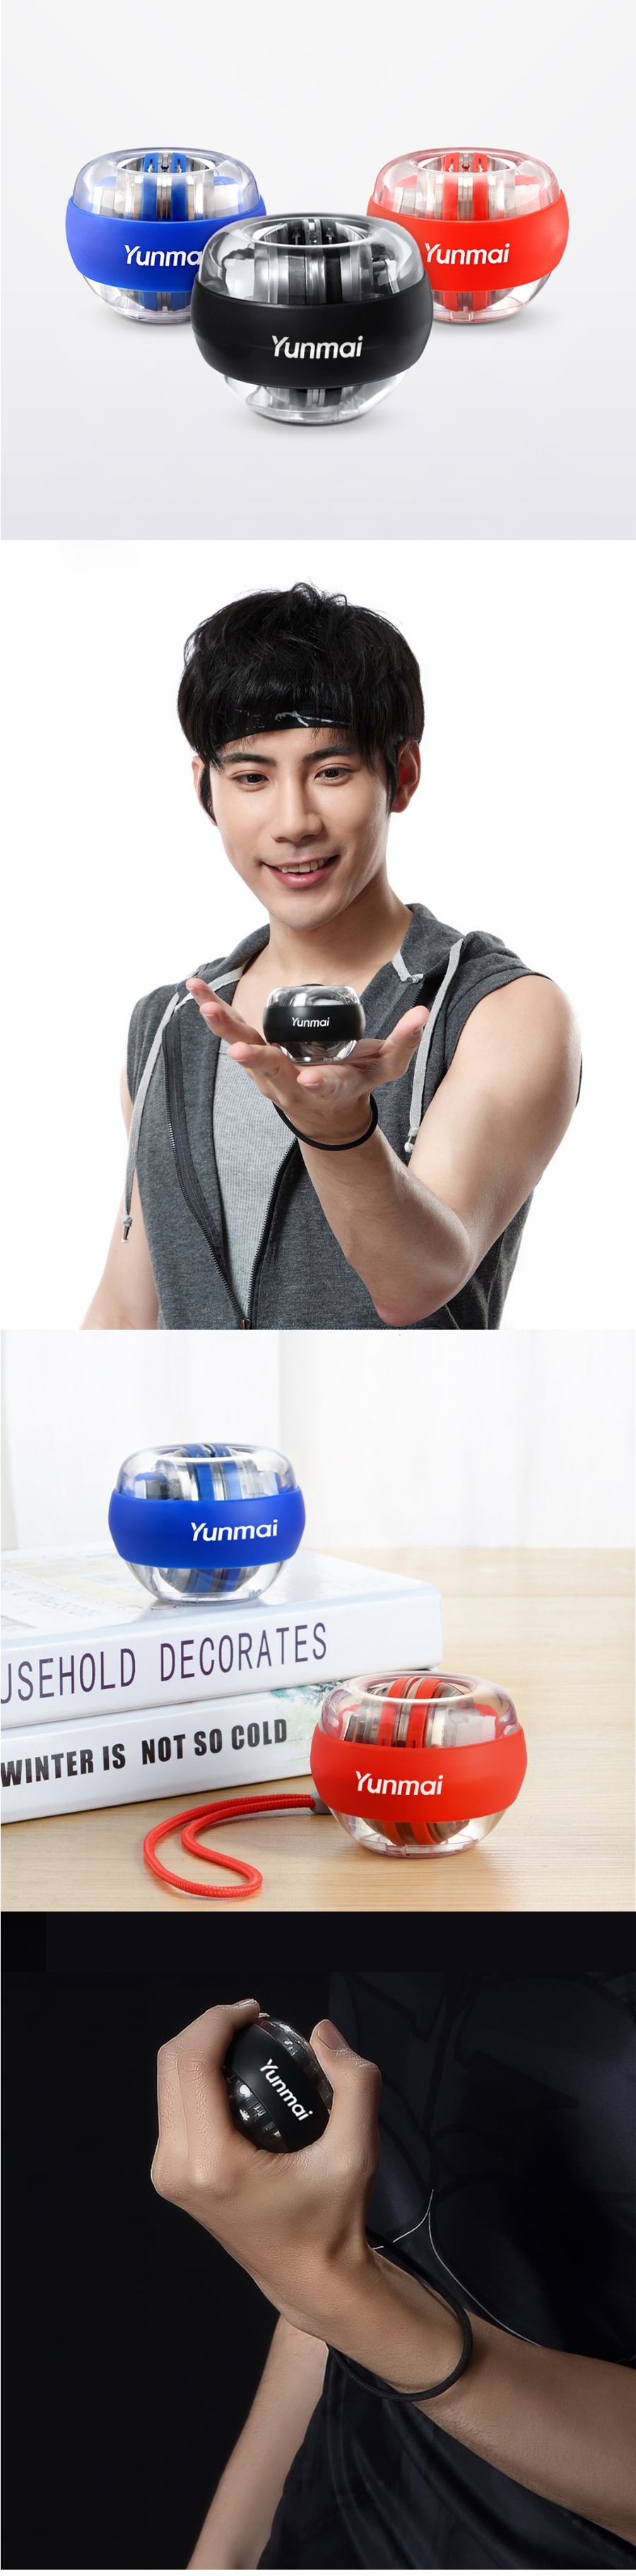 [De] YUNMAI LED Bola de Pulso Super Giroscópio Autoinicializado Gyro Arm Force Trainer Músculo Relaxar Casa Aptidão Equipamento